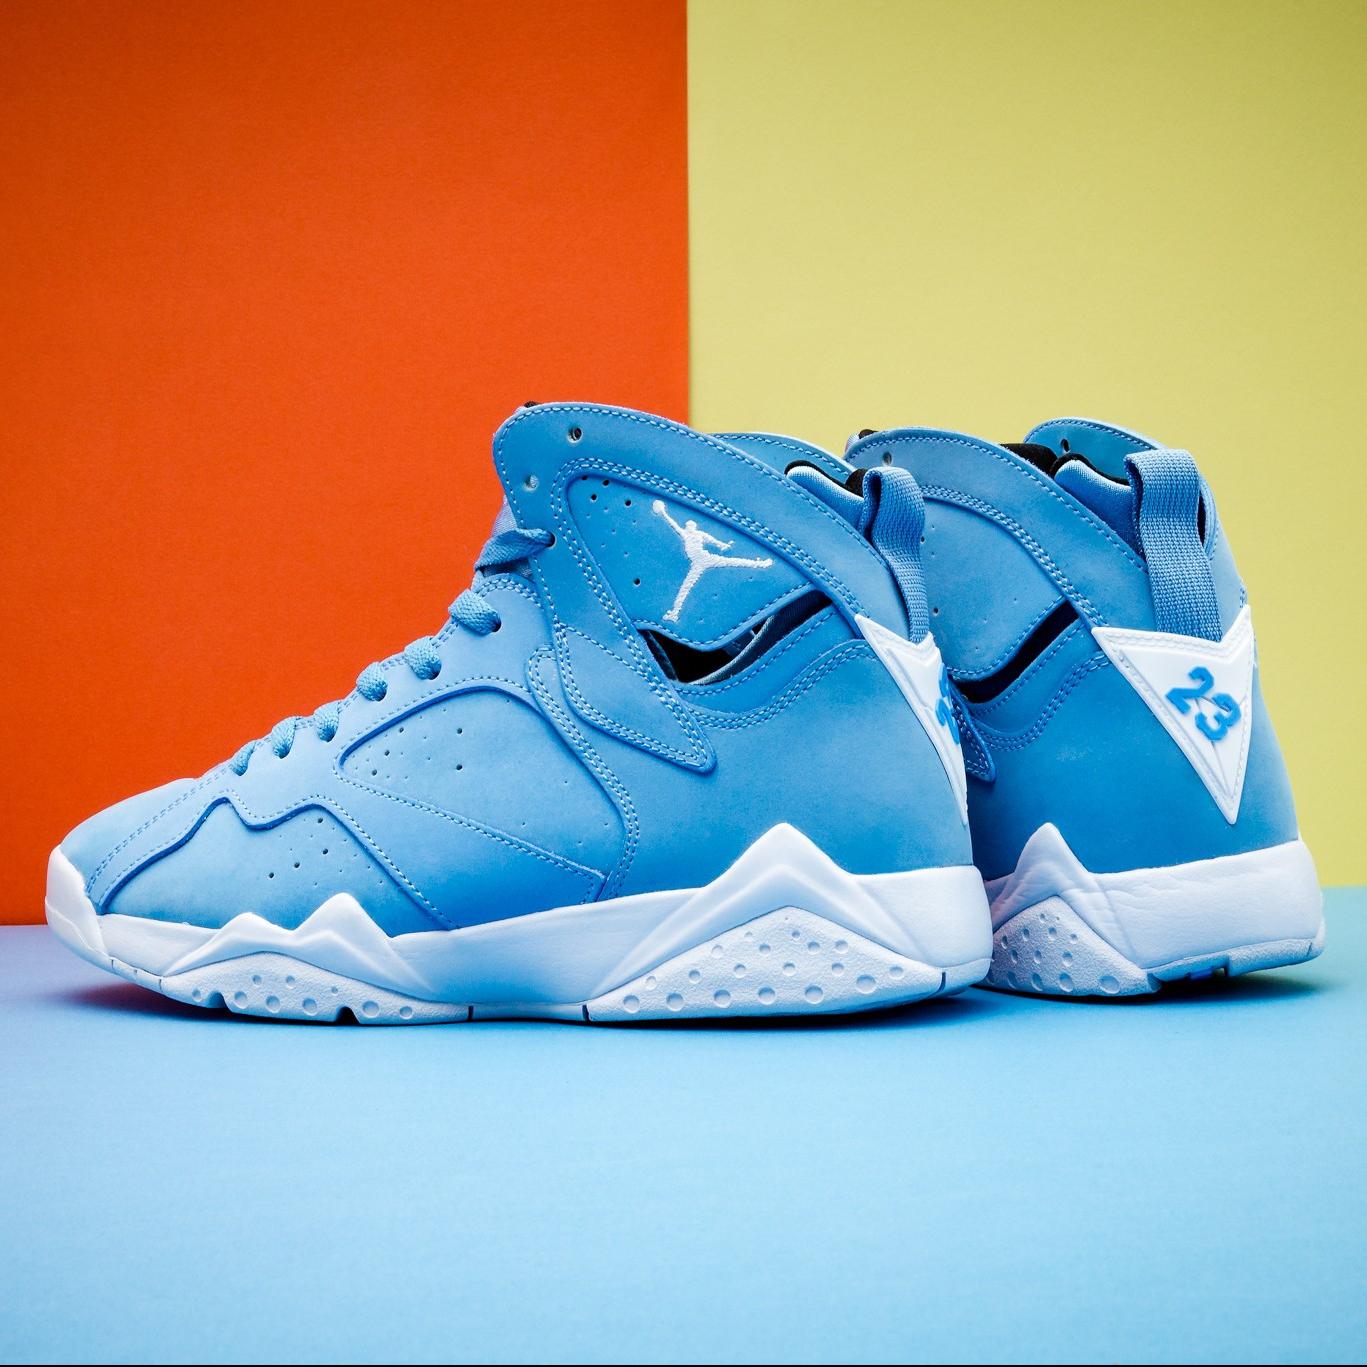 AIR JORDAN 7 RETRO “UNIVERSITY BLUE” 男款篮球鞋